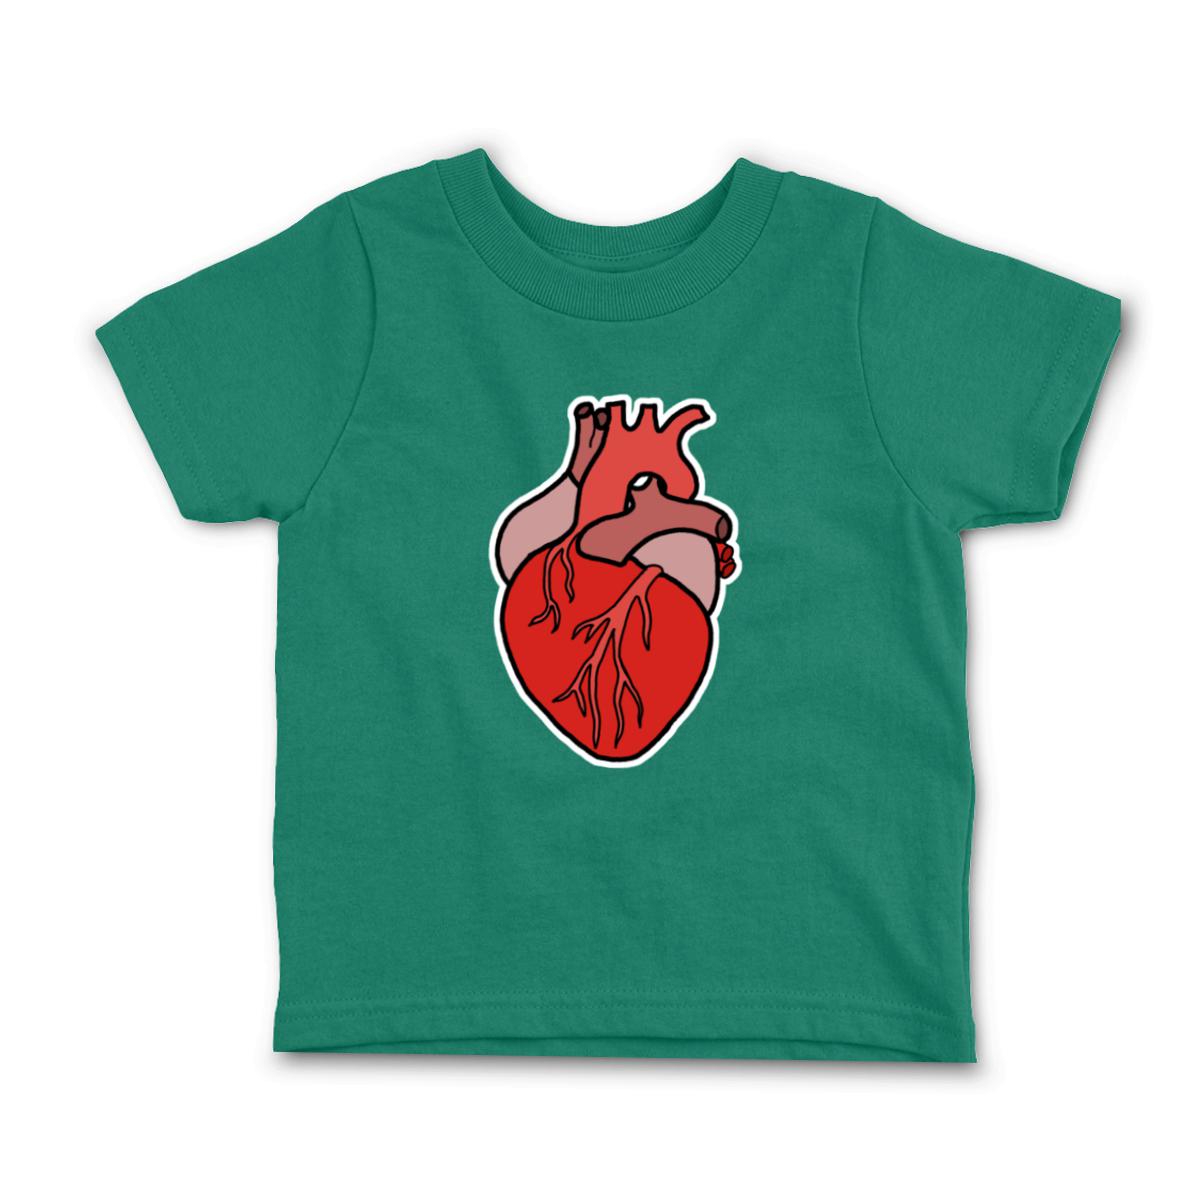 Illustrative Heart Toddler Tee 2T kelly